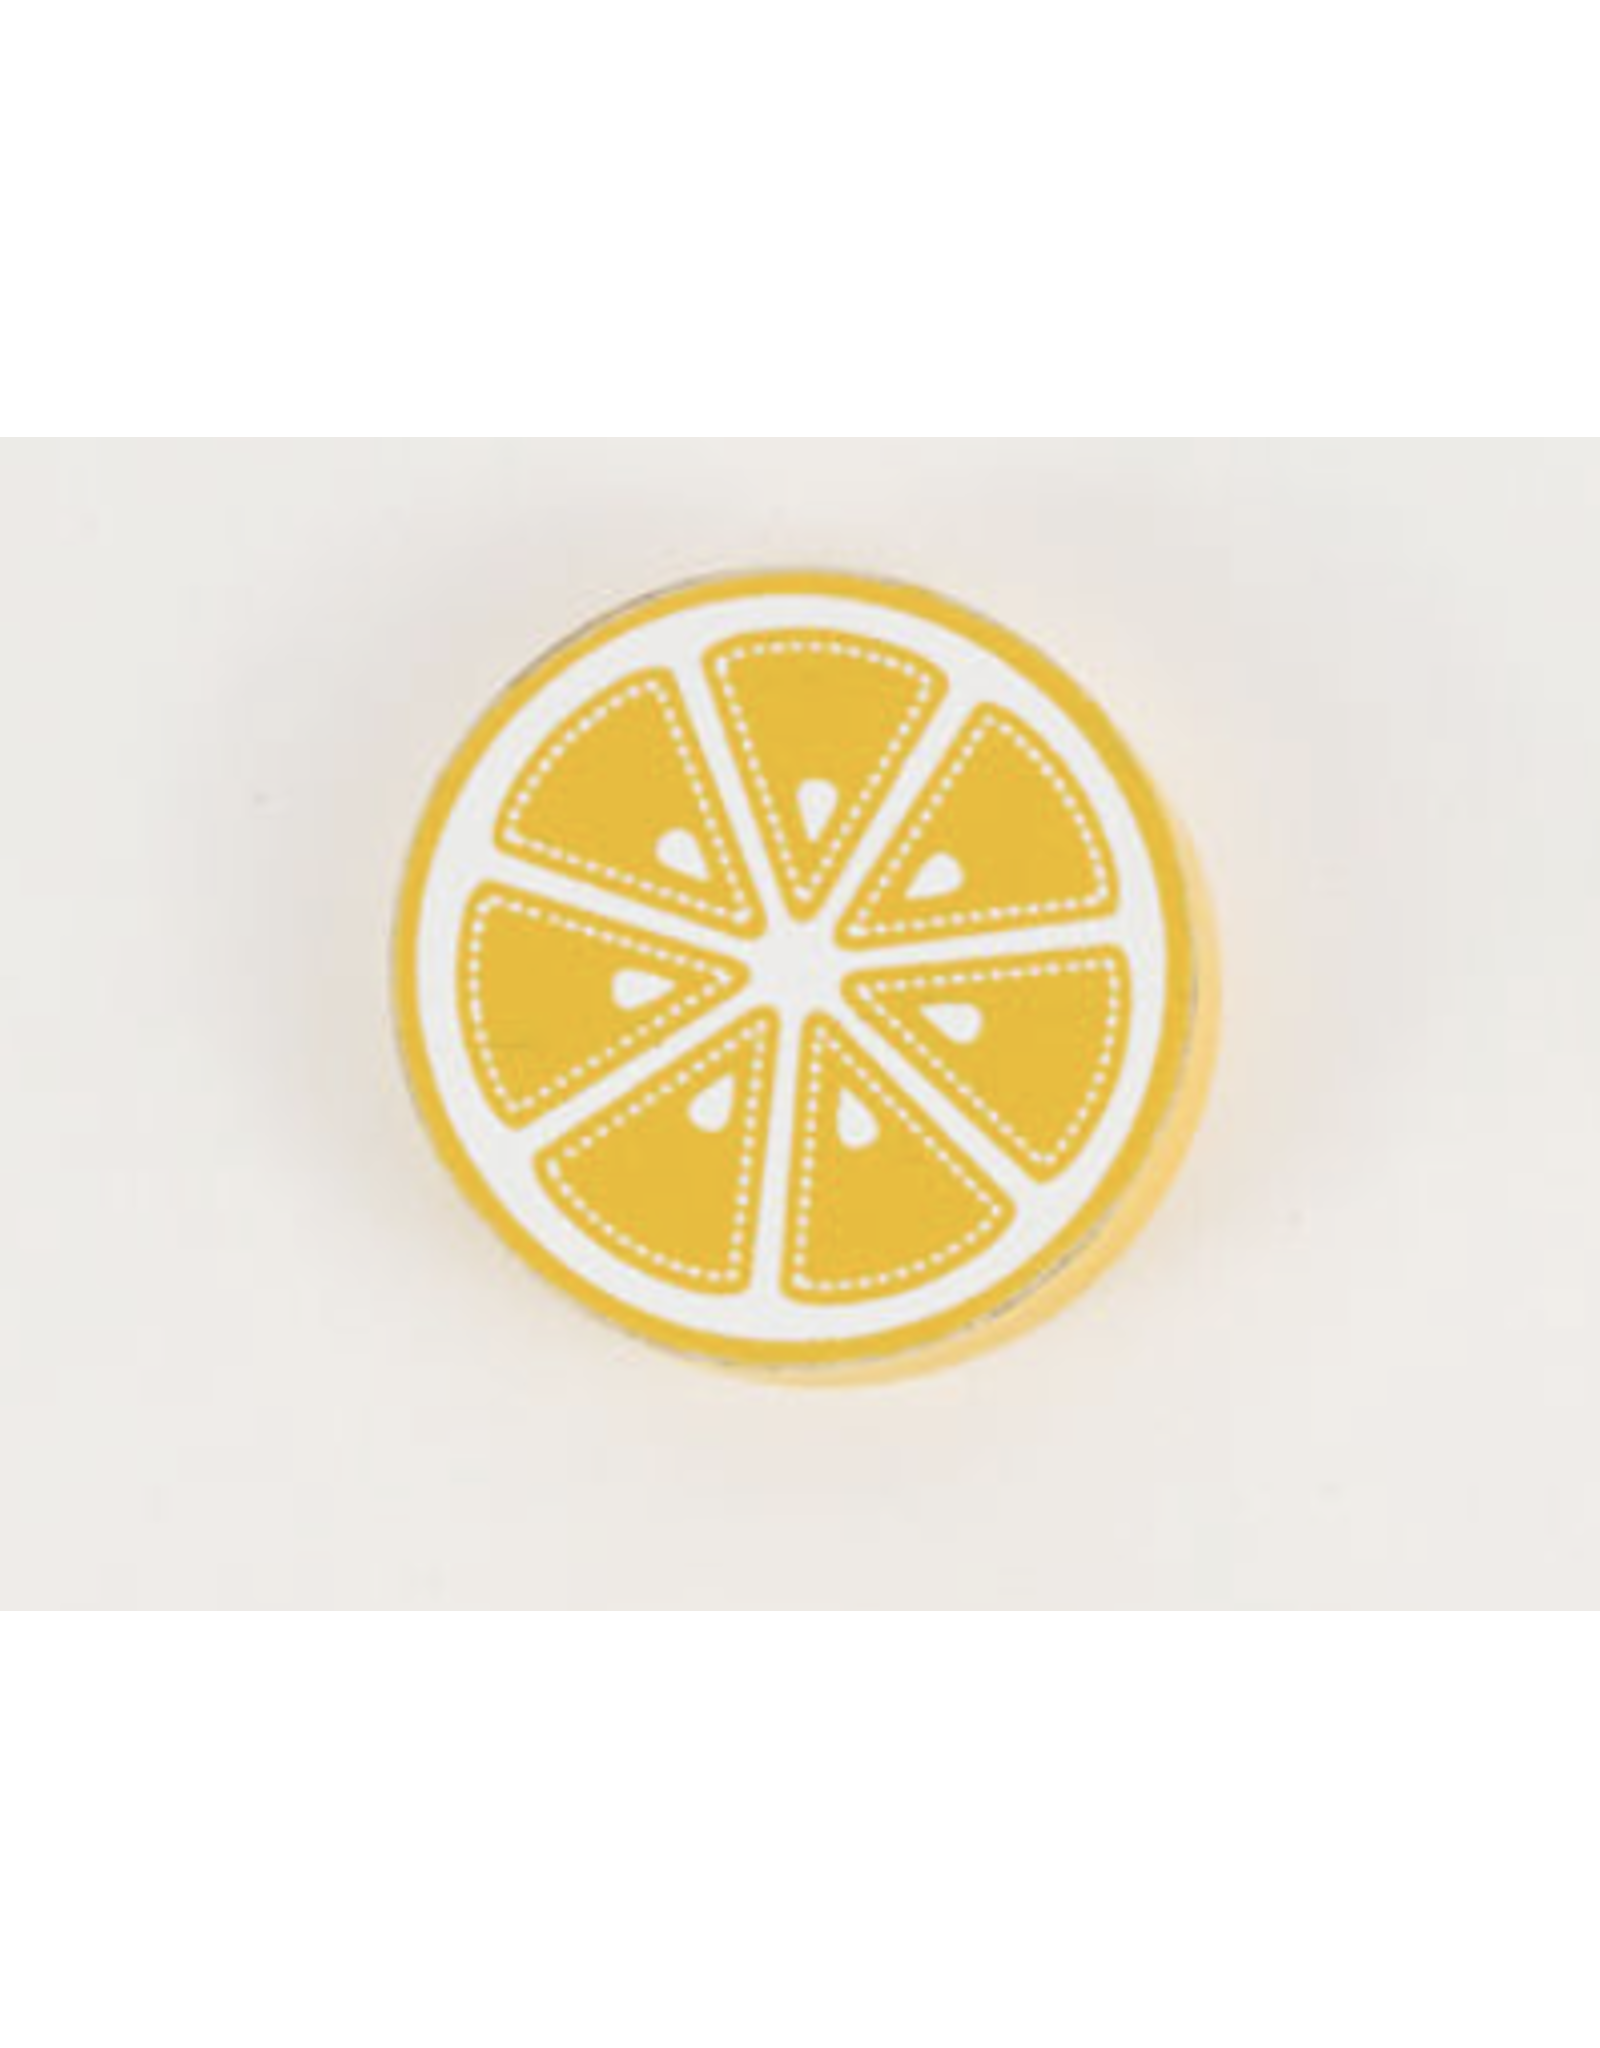 Adams & Co. Lemon Slice Tiles